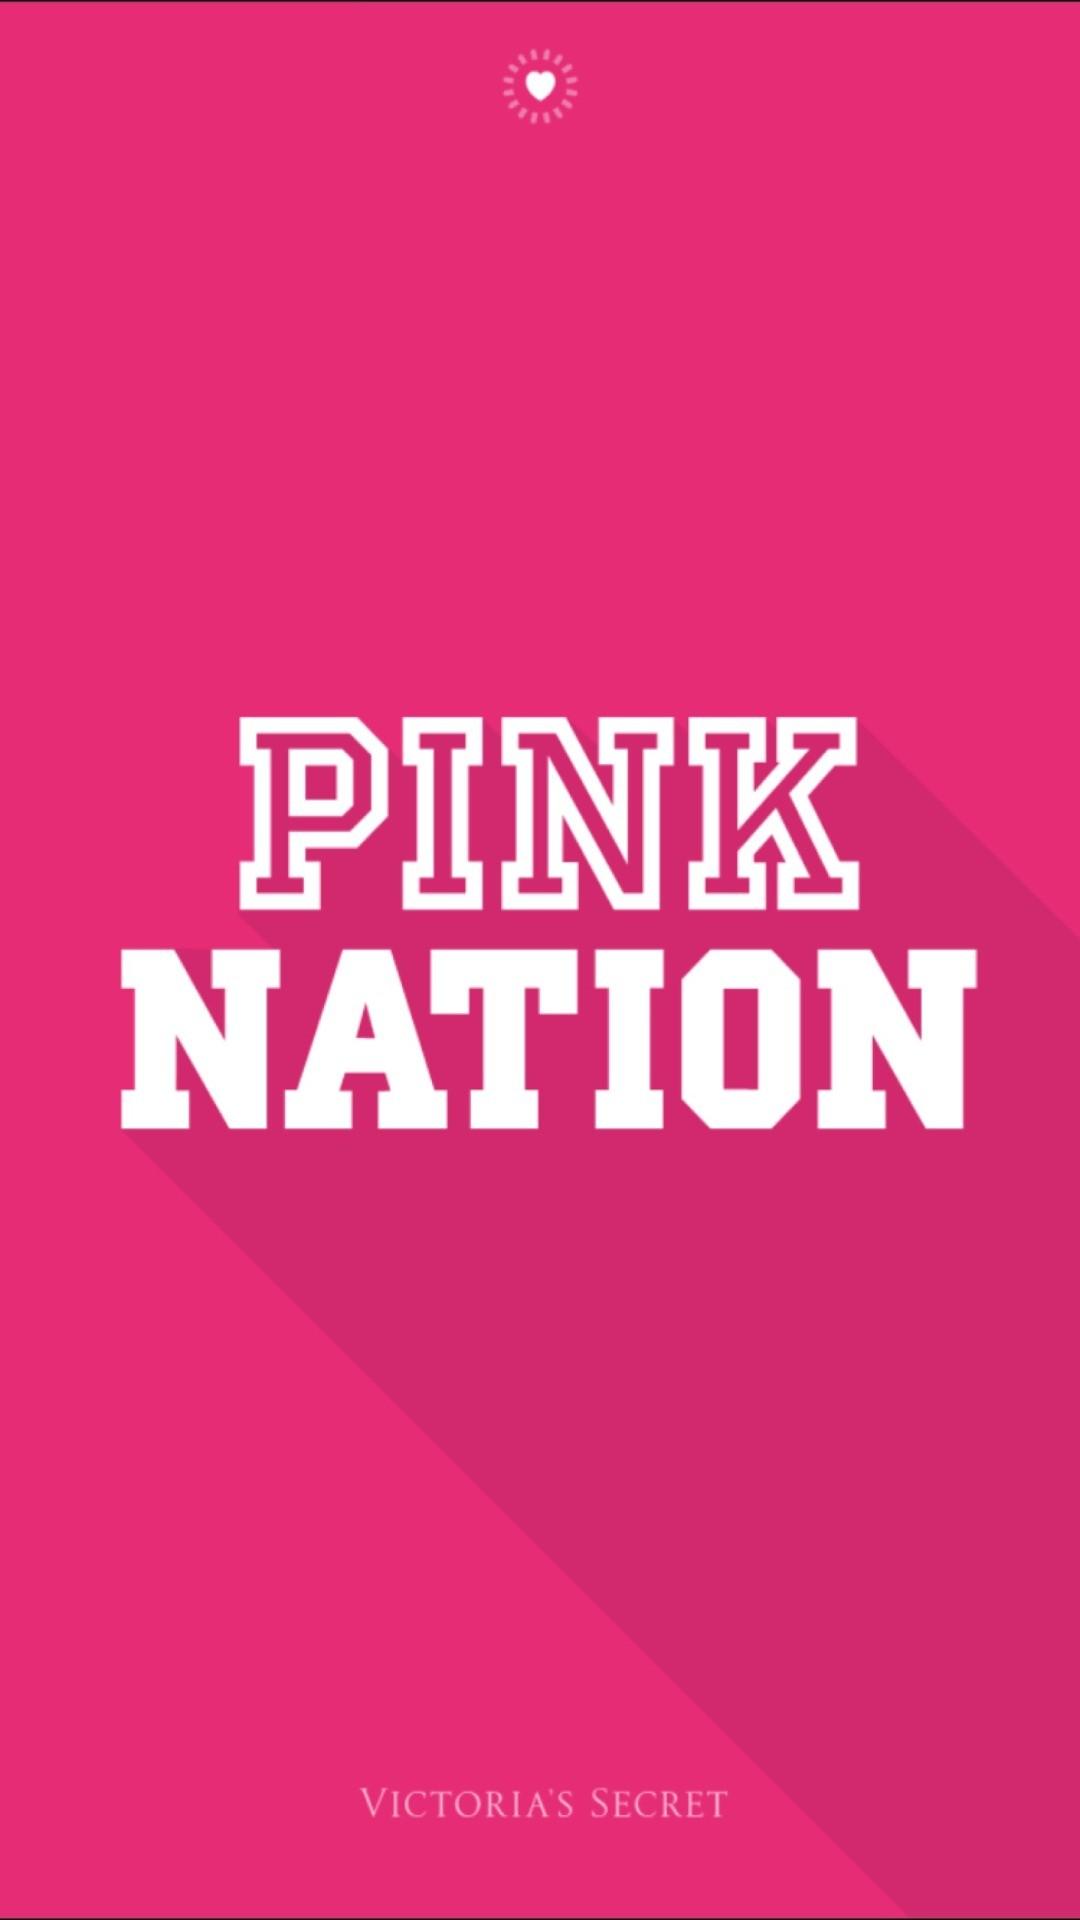 Pink Brand Wallpaper